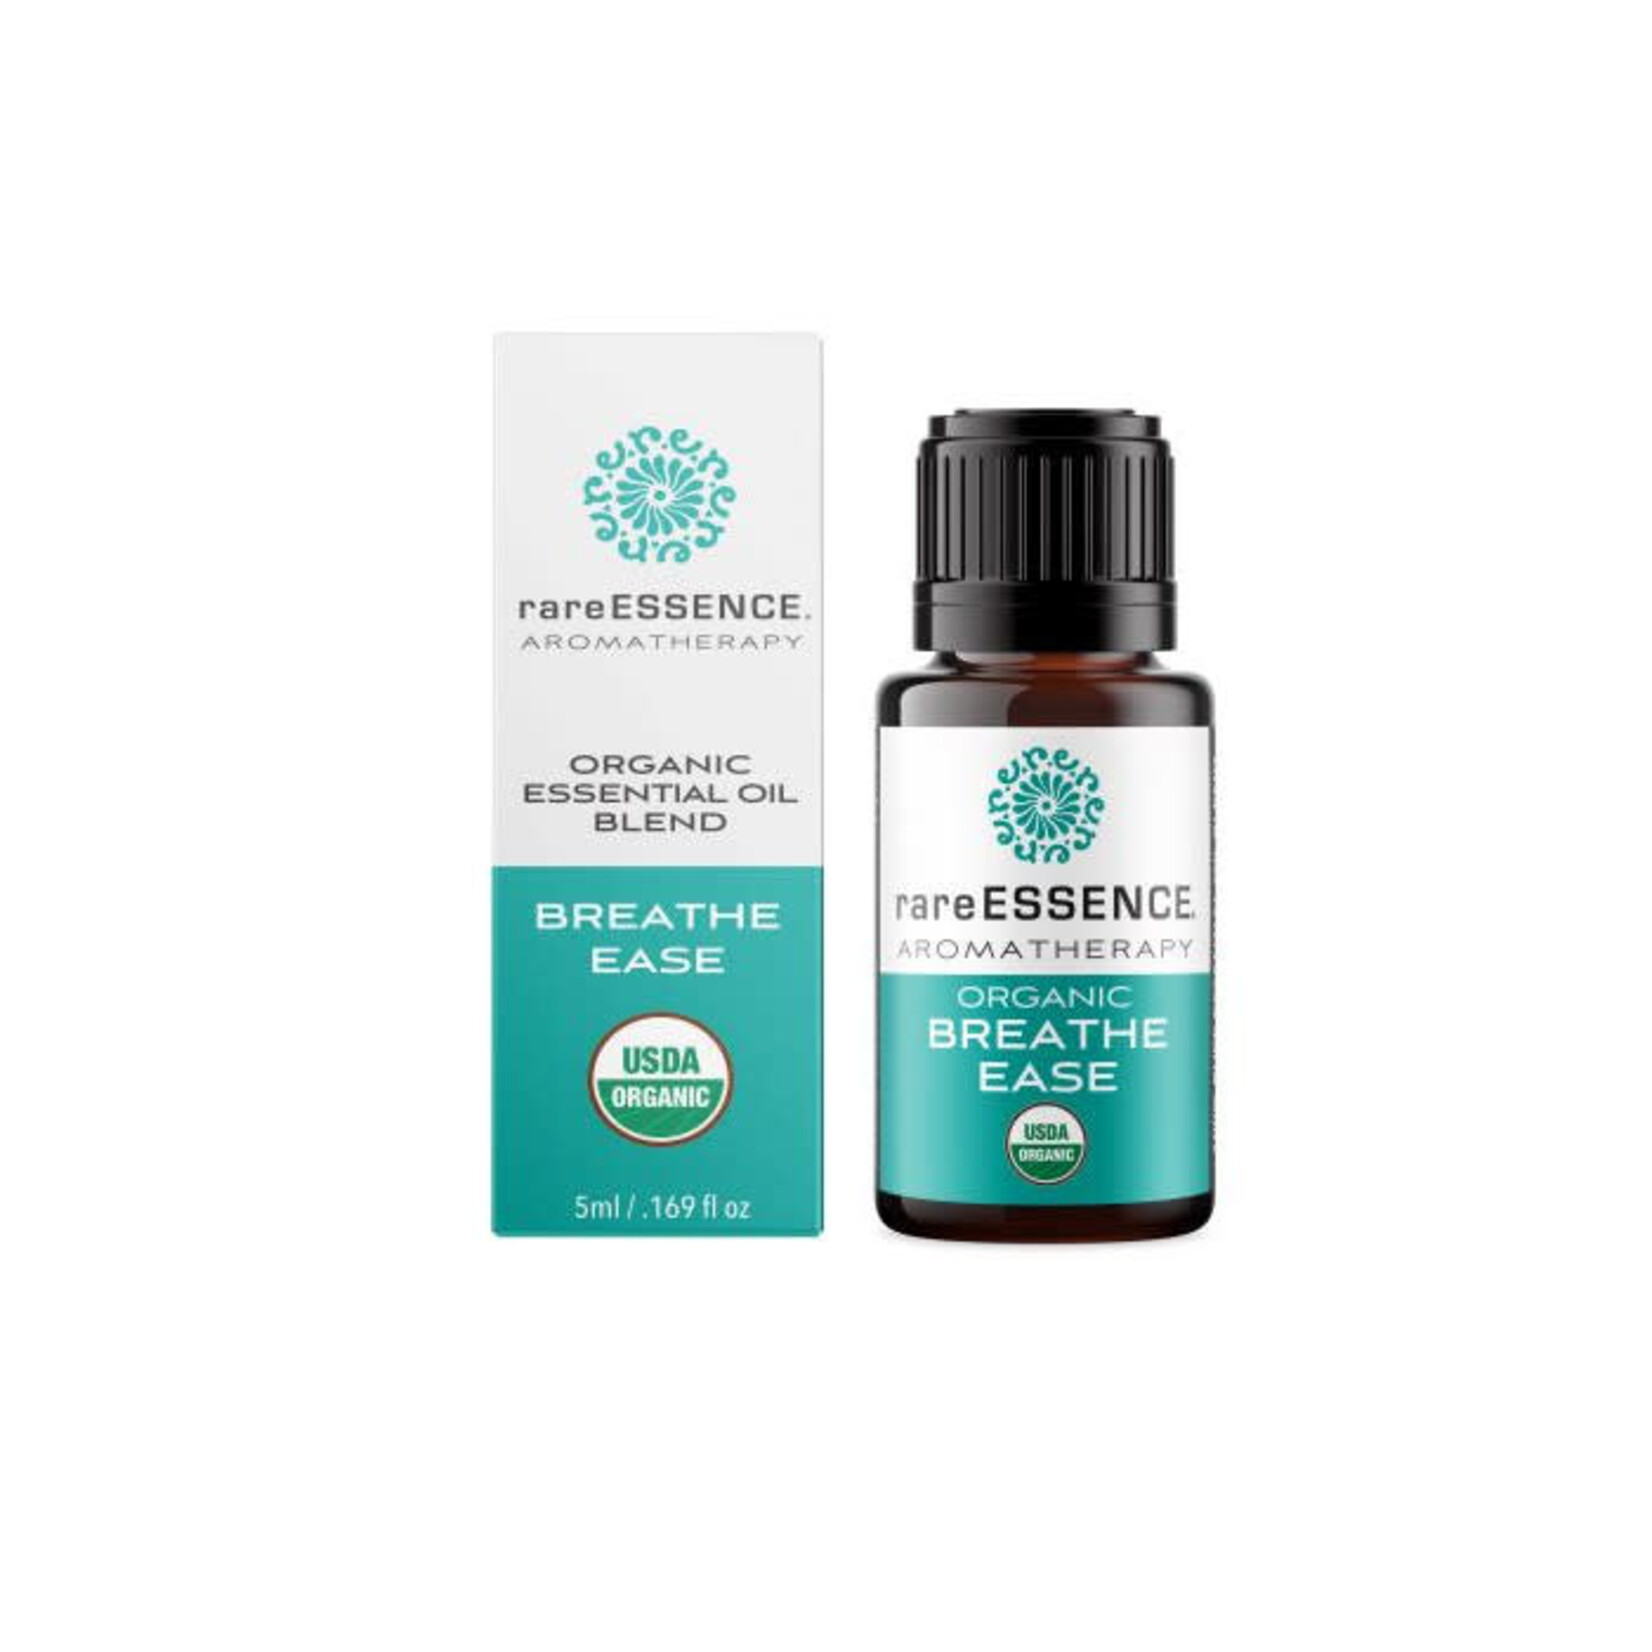 rareESSENCE Aromatherapy Organic Breathe Ease Essential Oil Blend